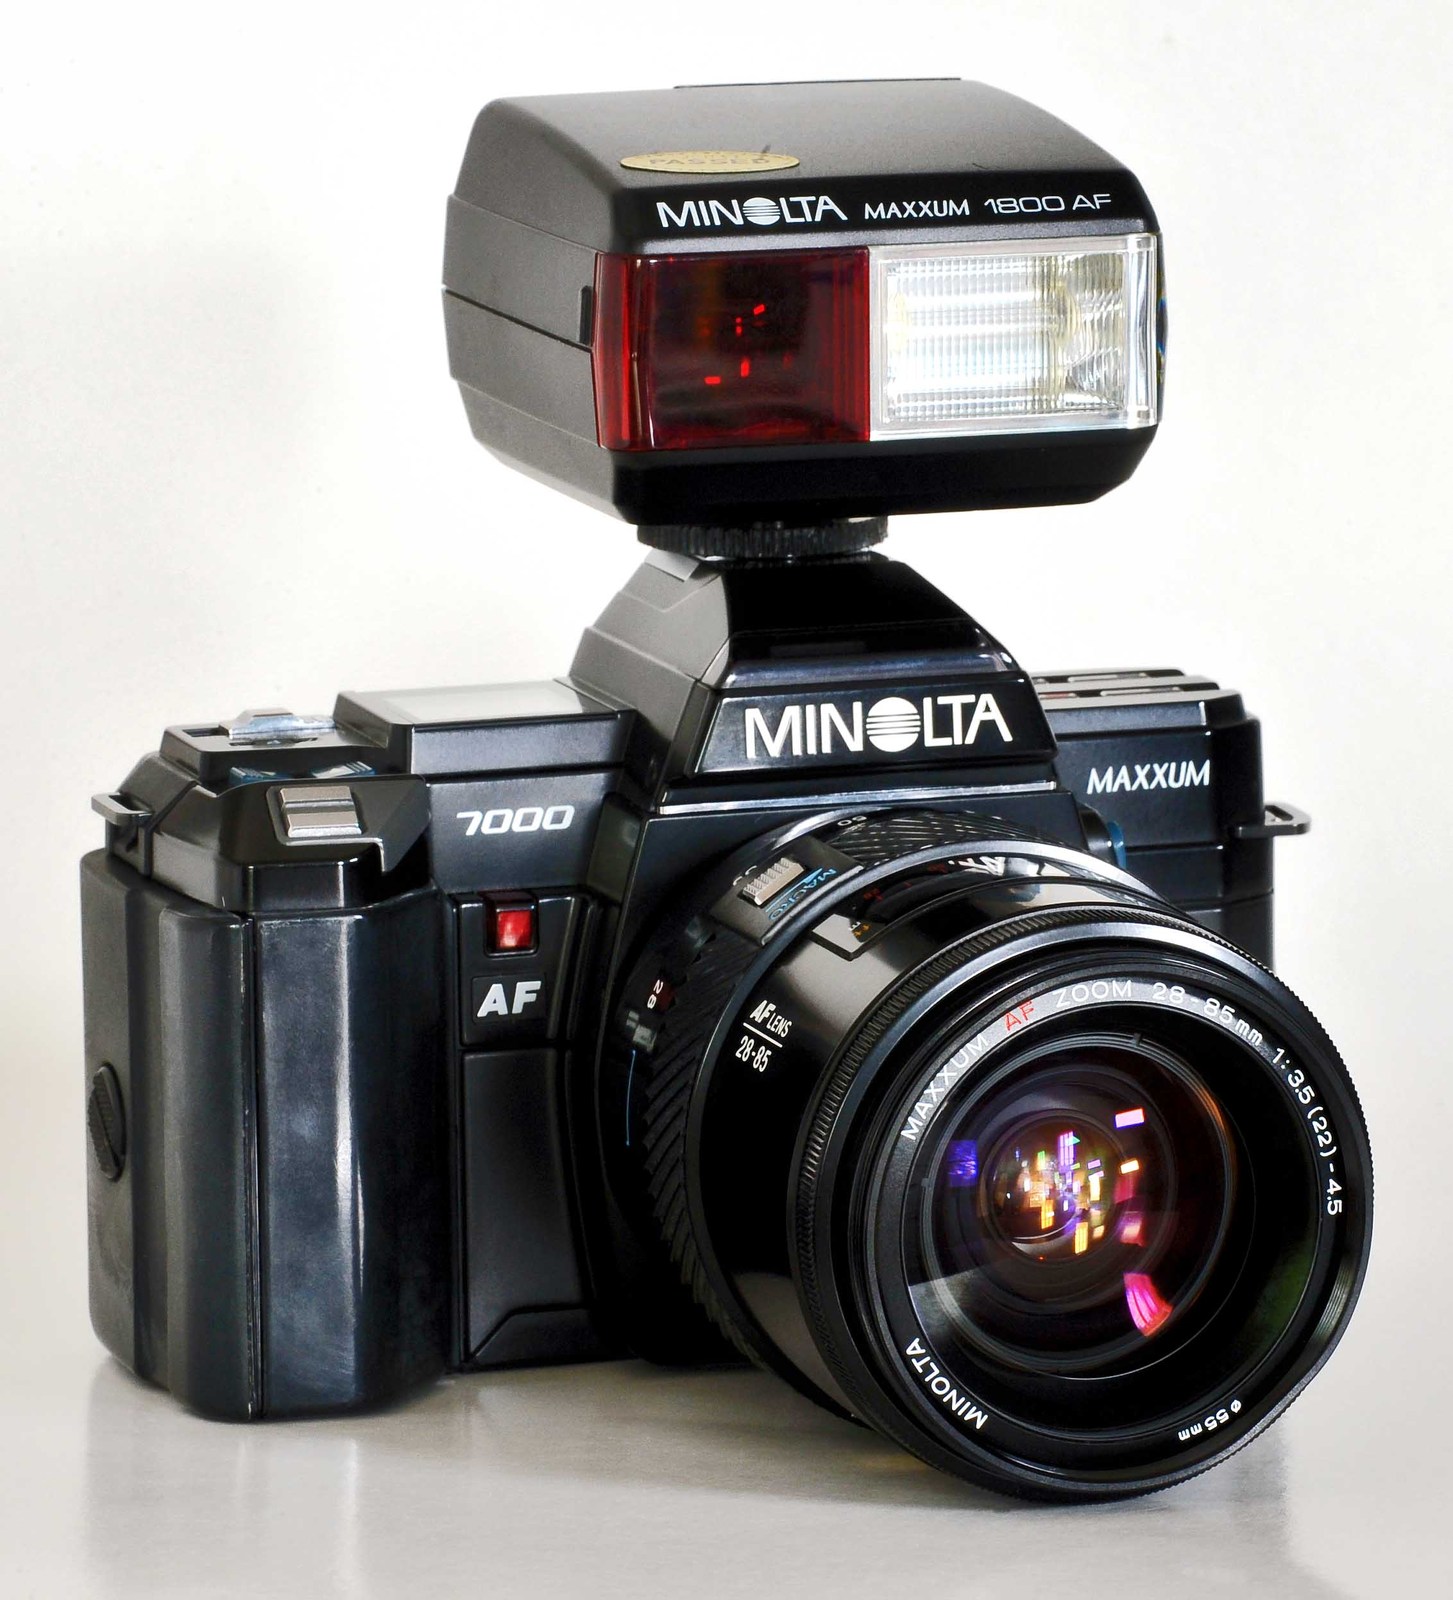 Minolta Camera MAXXUM: 26 listings